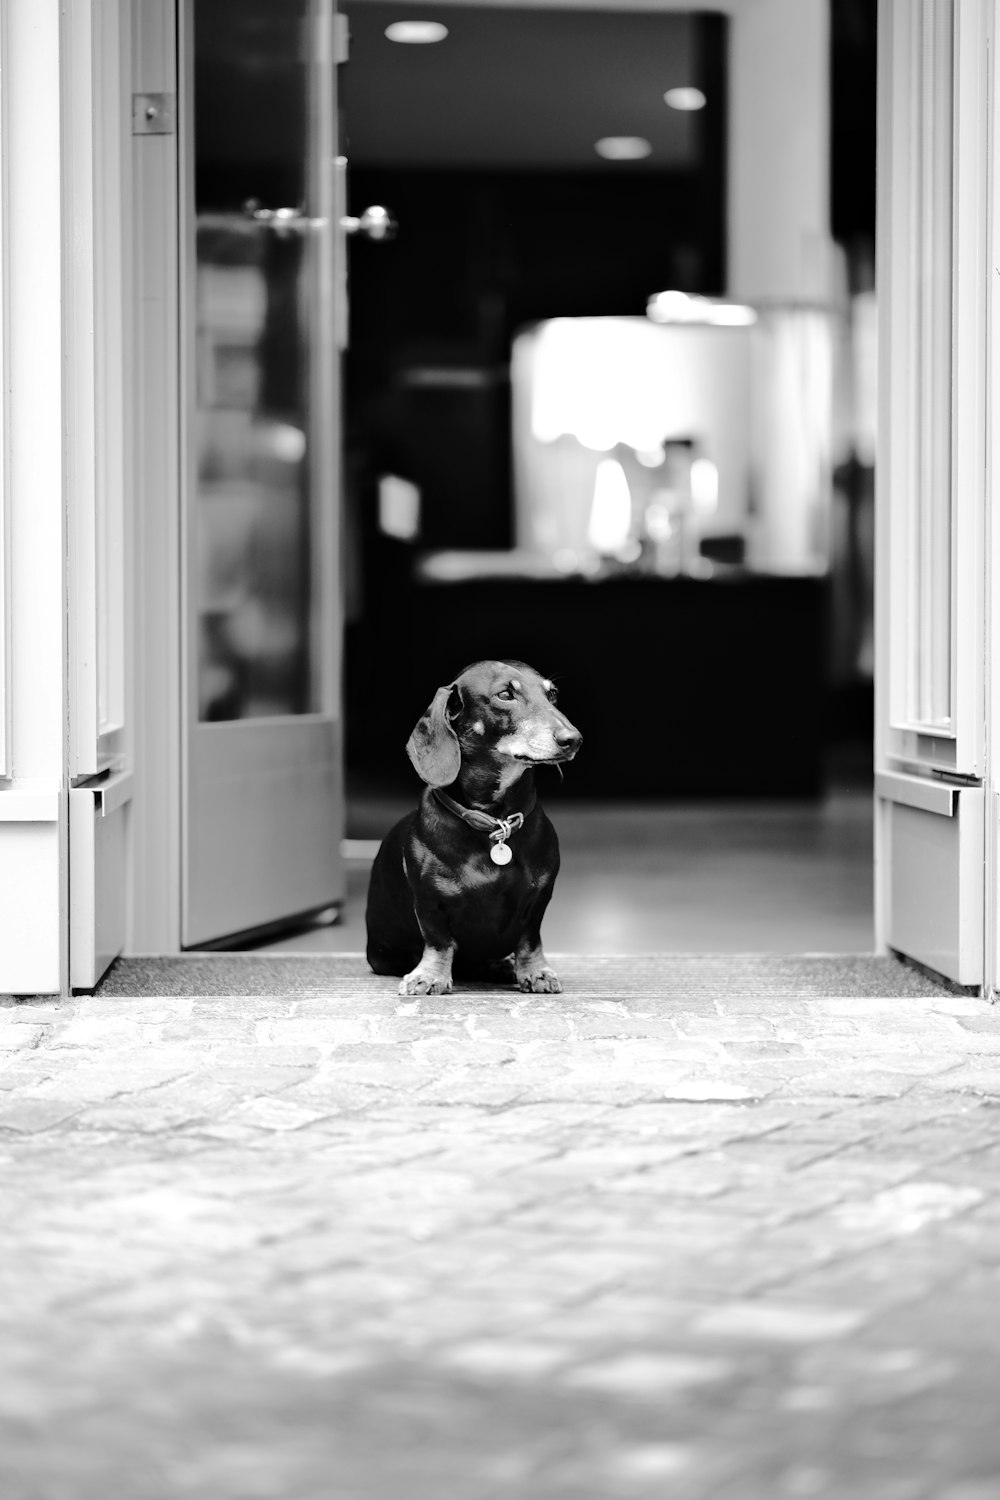 a dog sitting in a doorway